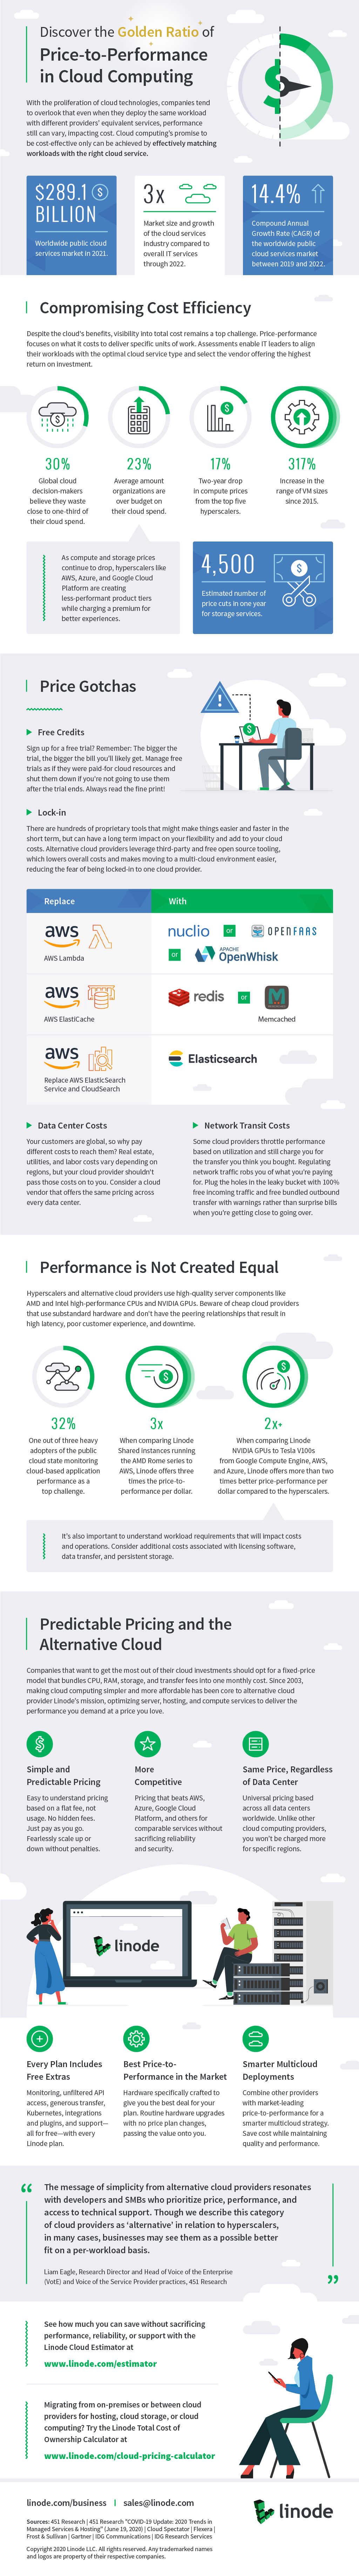 Linode Price-to-Performance Cloud Computing infographic